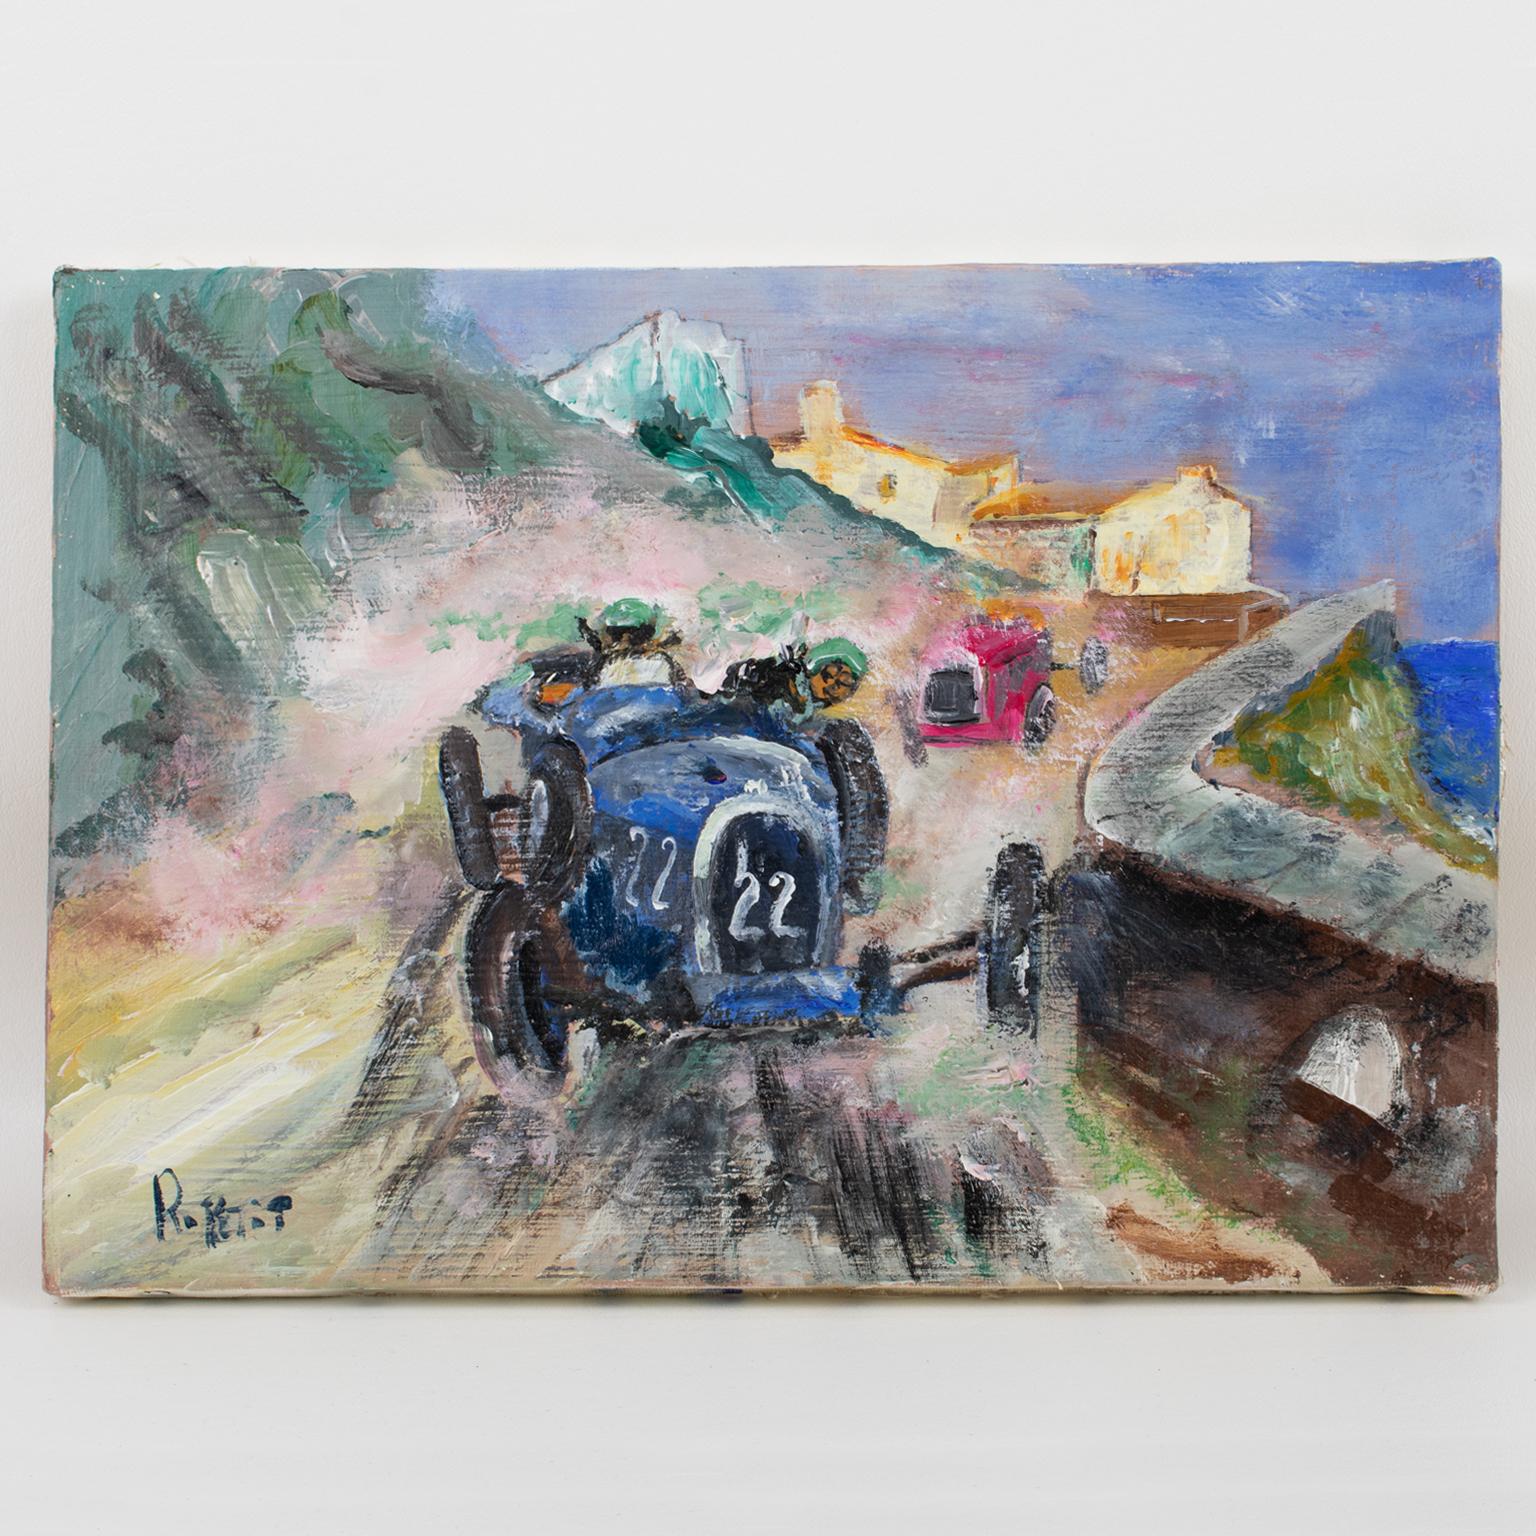 Bugatti Car Race in Monaco 1931, Oil on Canvas Painting by Rene Petit 12